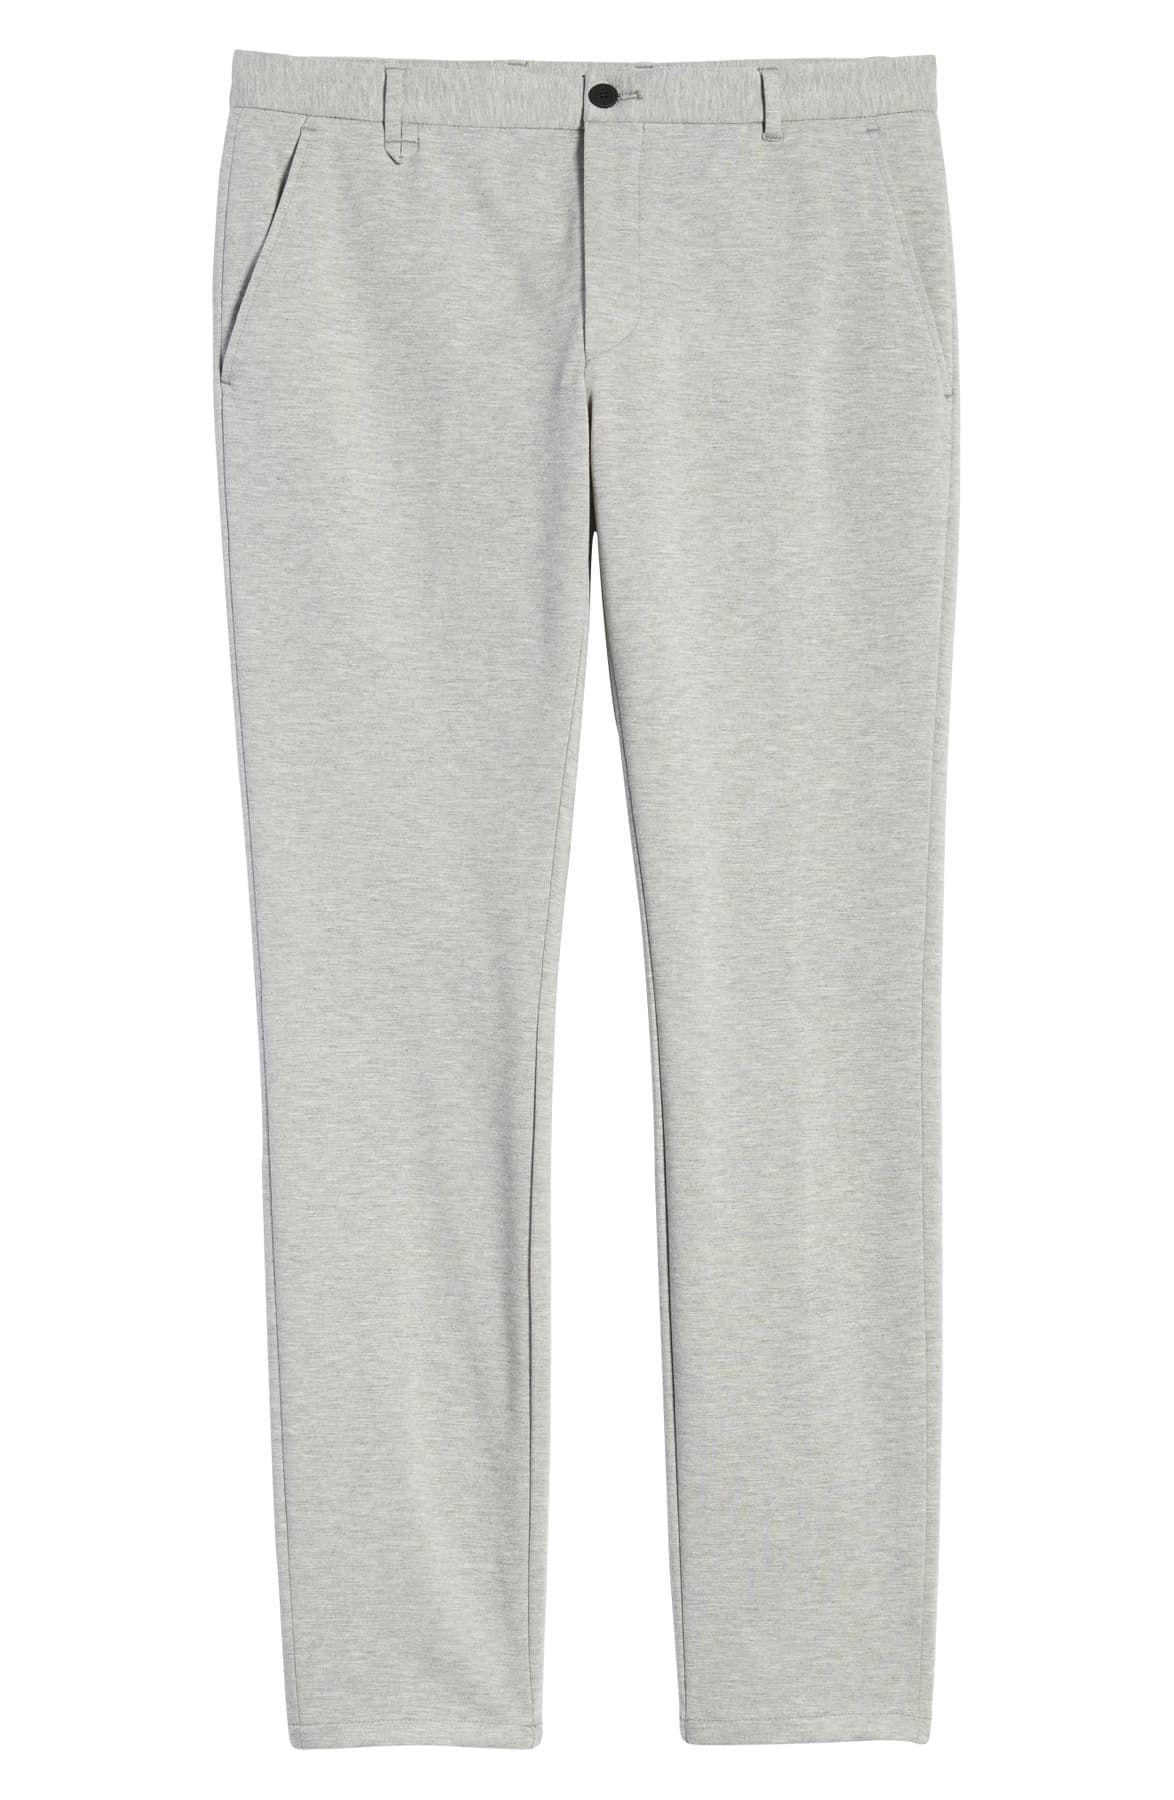 BOSS by HUGO BOSS Heldor Slim Fit Knit Pants in Gray for Men - Lyst